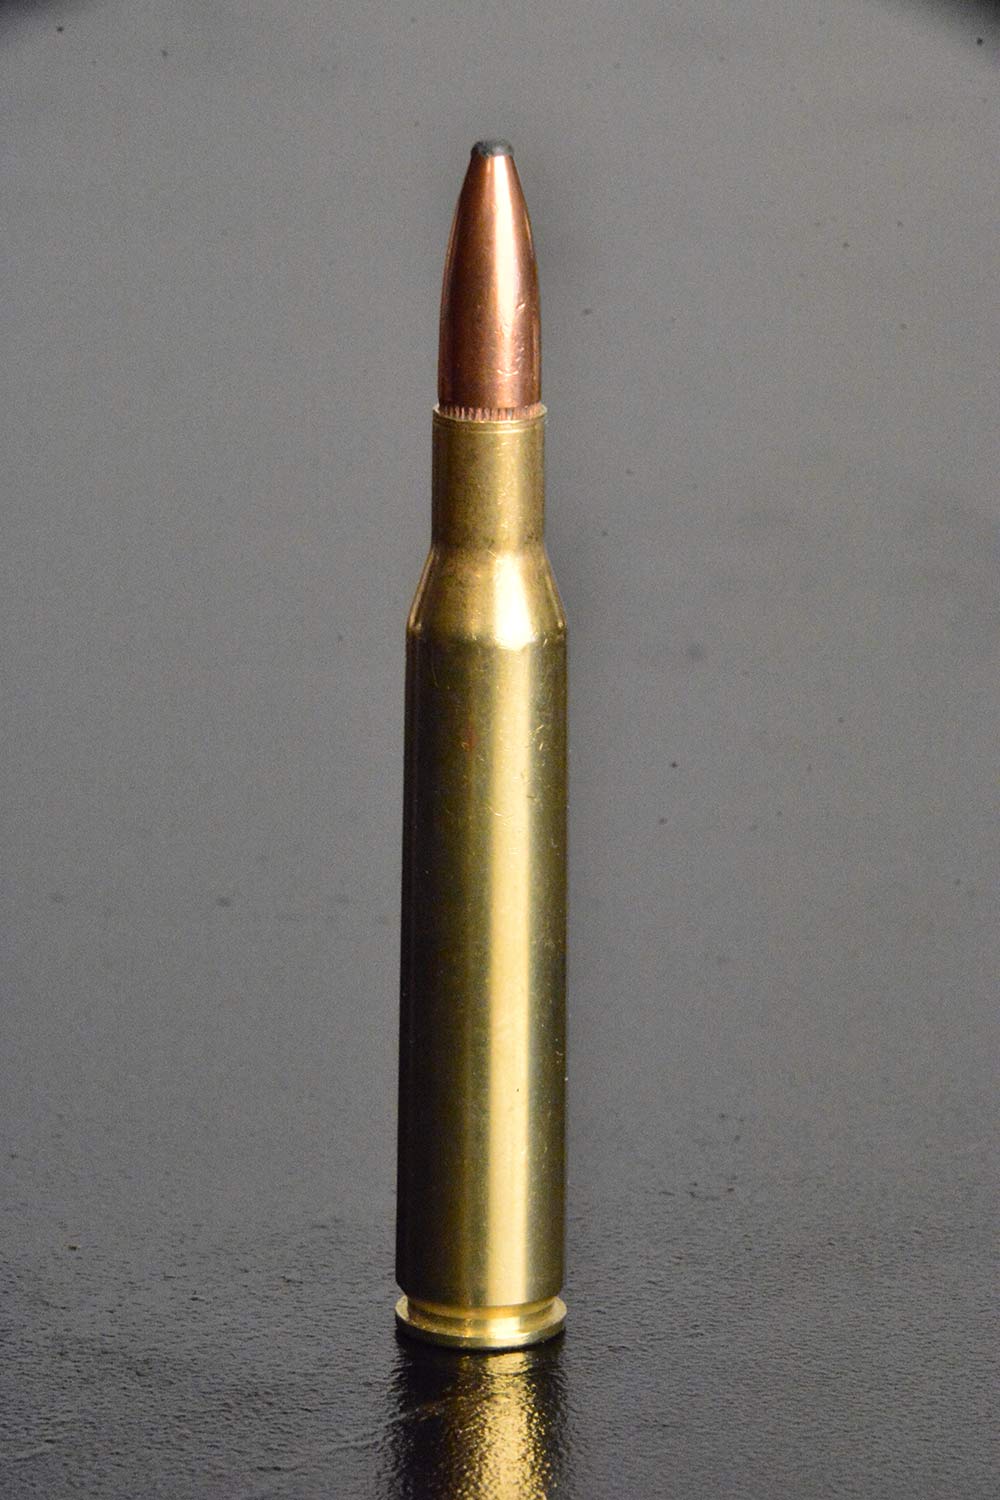 270 winchester hunting rifle ammunition